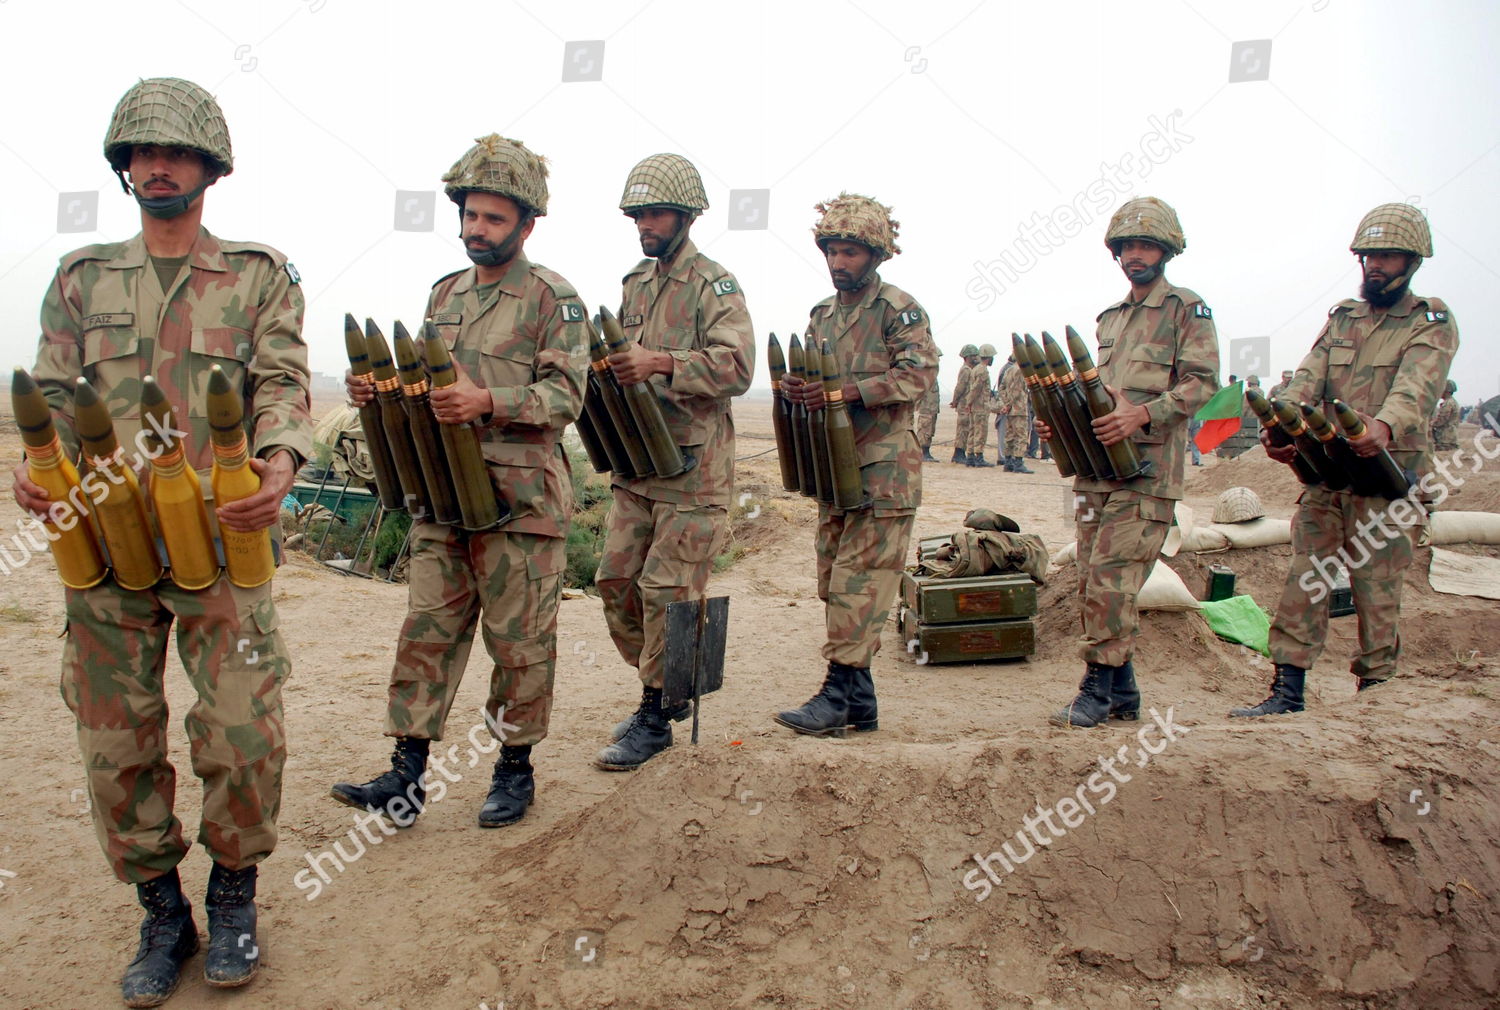 pakistan-military-exercises-jan-2010-shutterstock-editorial-7736850f.jpg